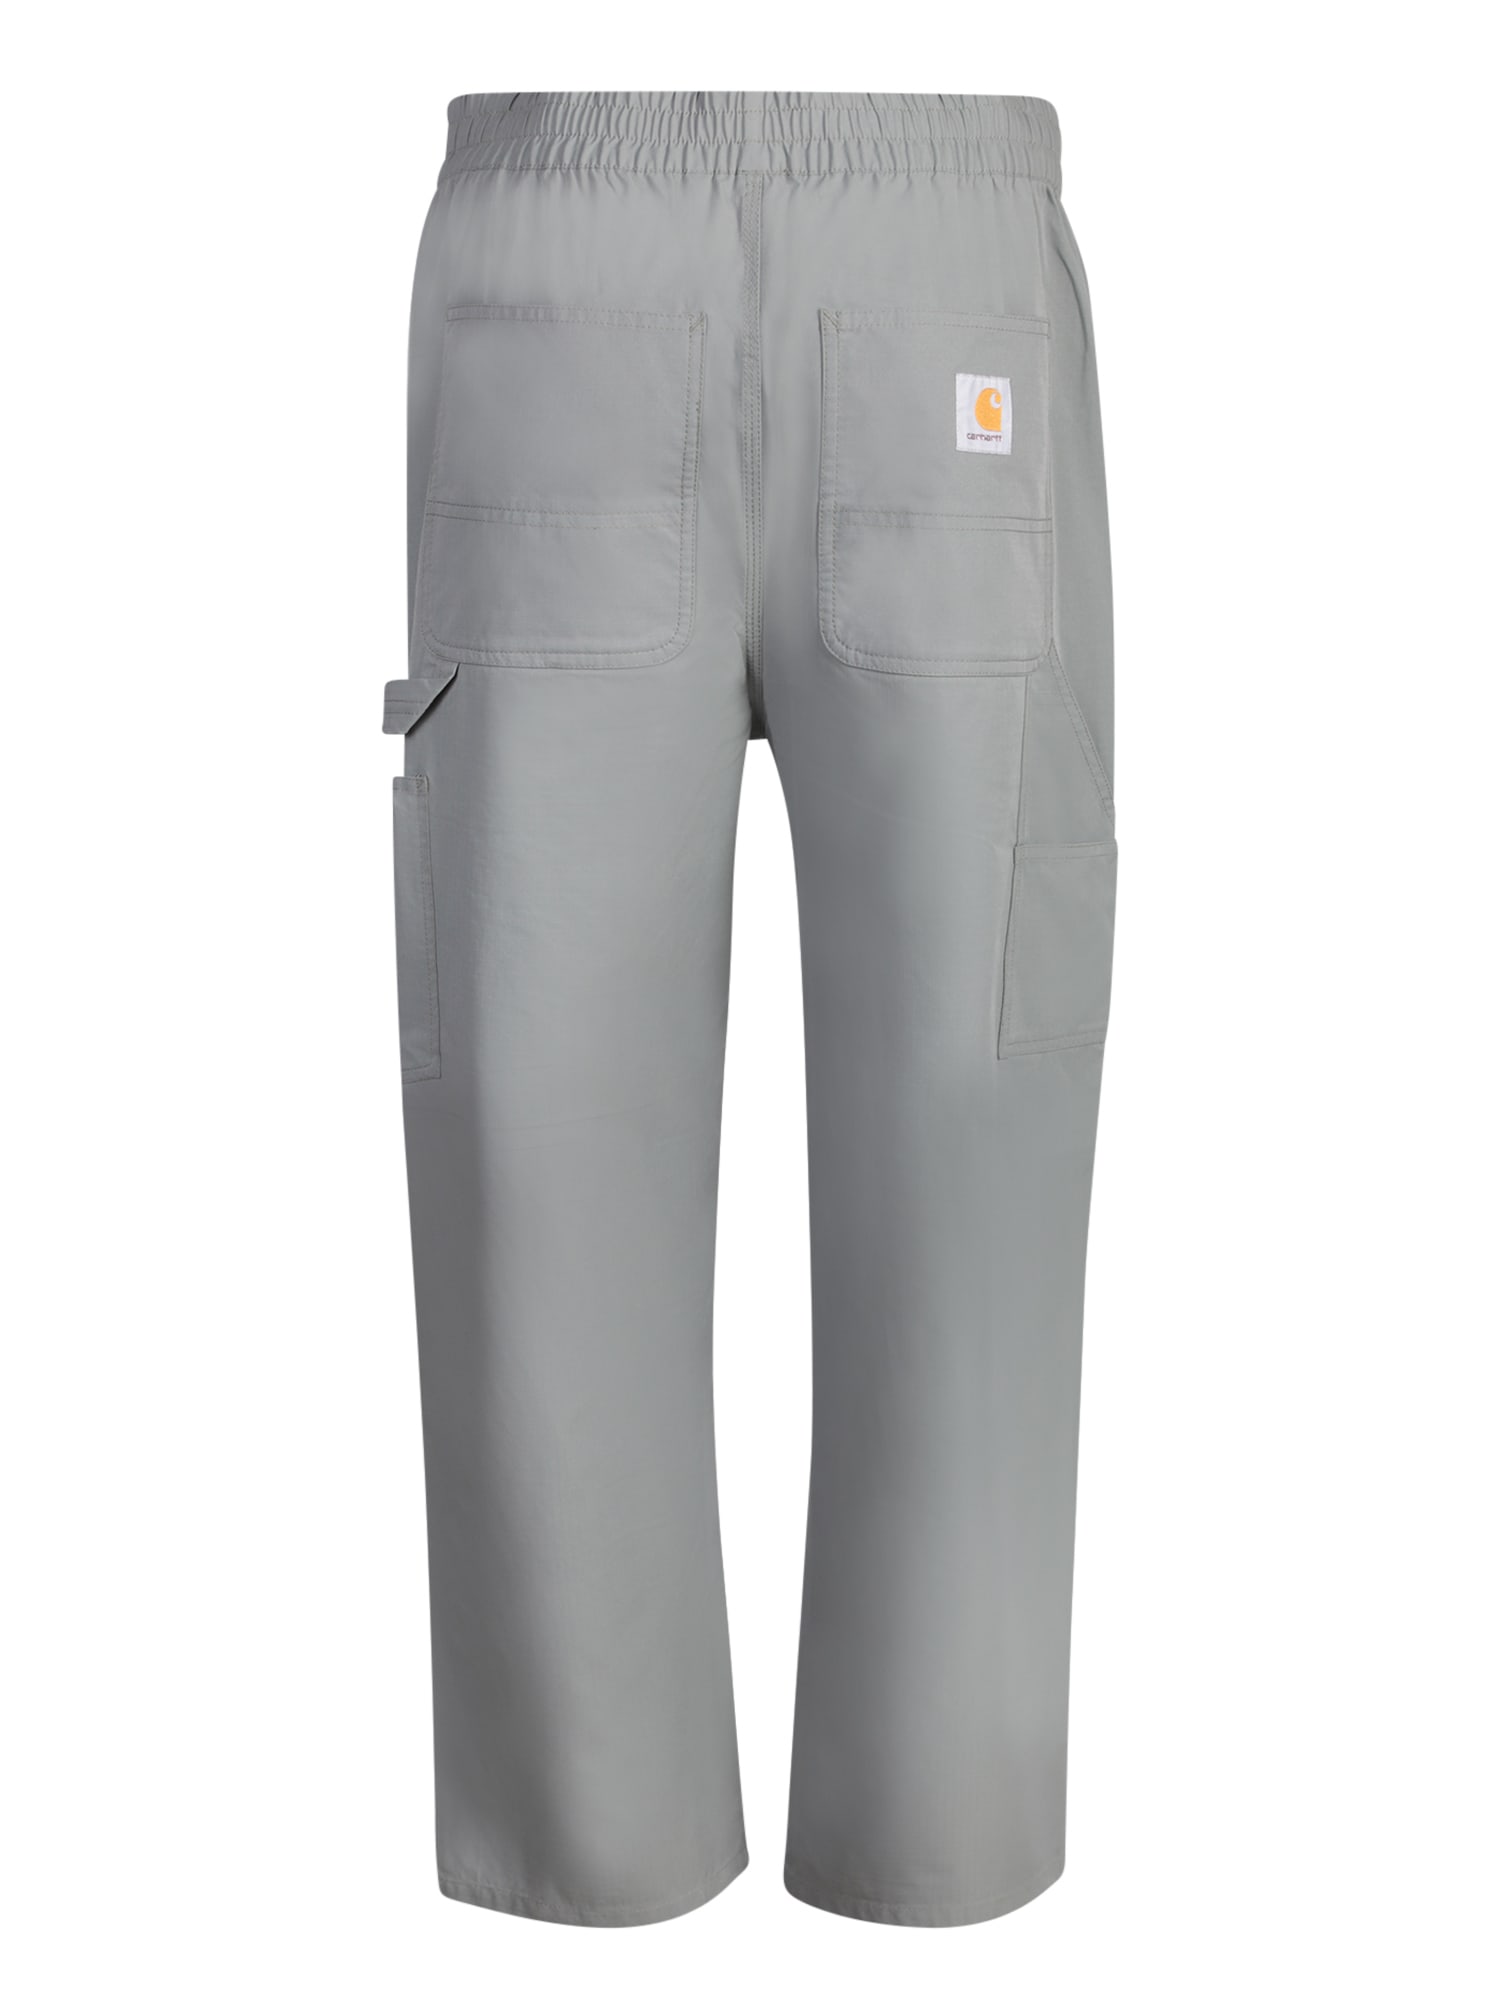 Shop Carhartt Montana Grey Trousers